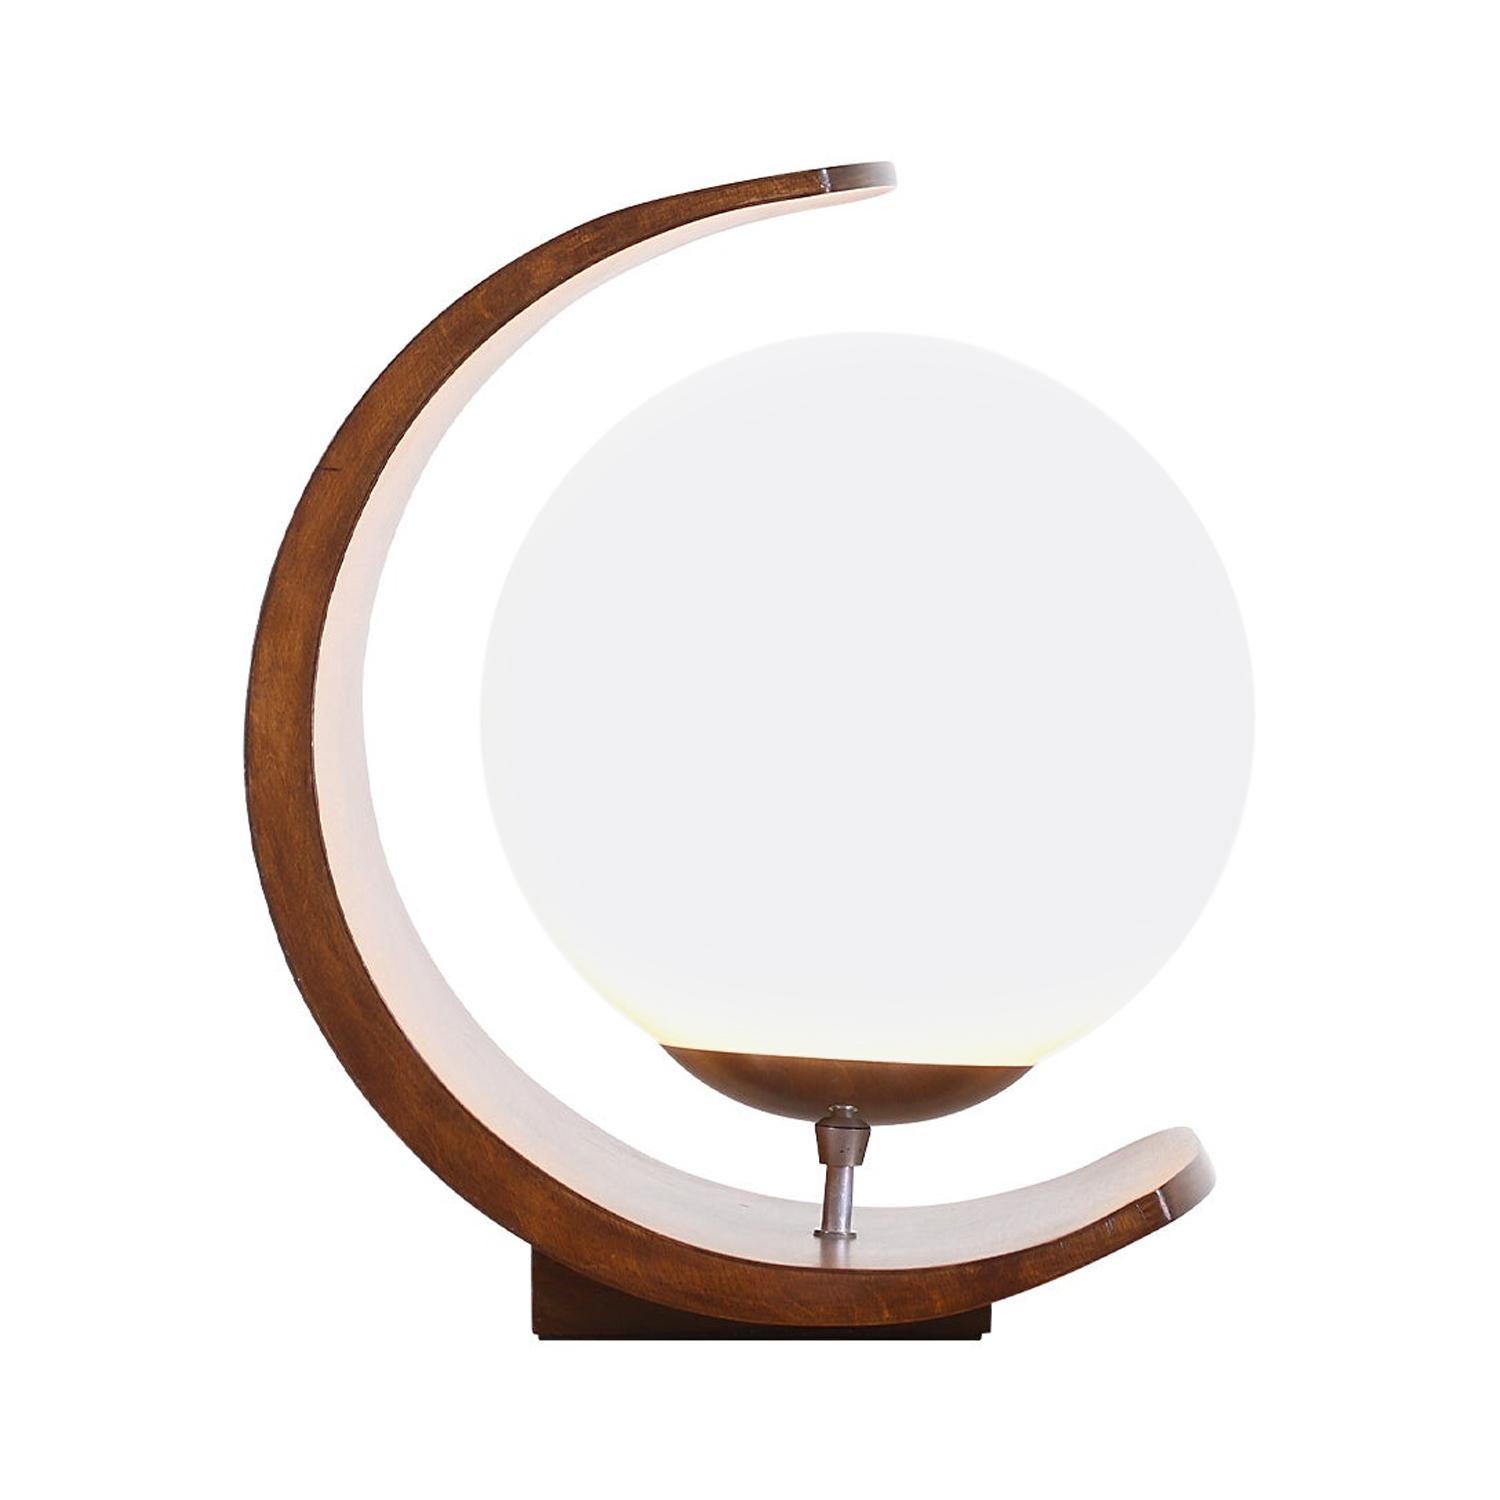 Arthur Jacobs "Half Moon" Table Lamp for Modeline